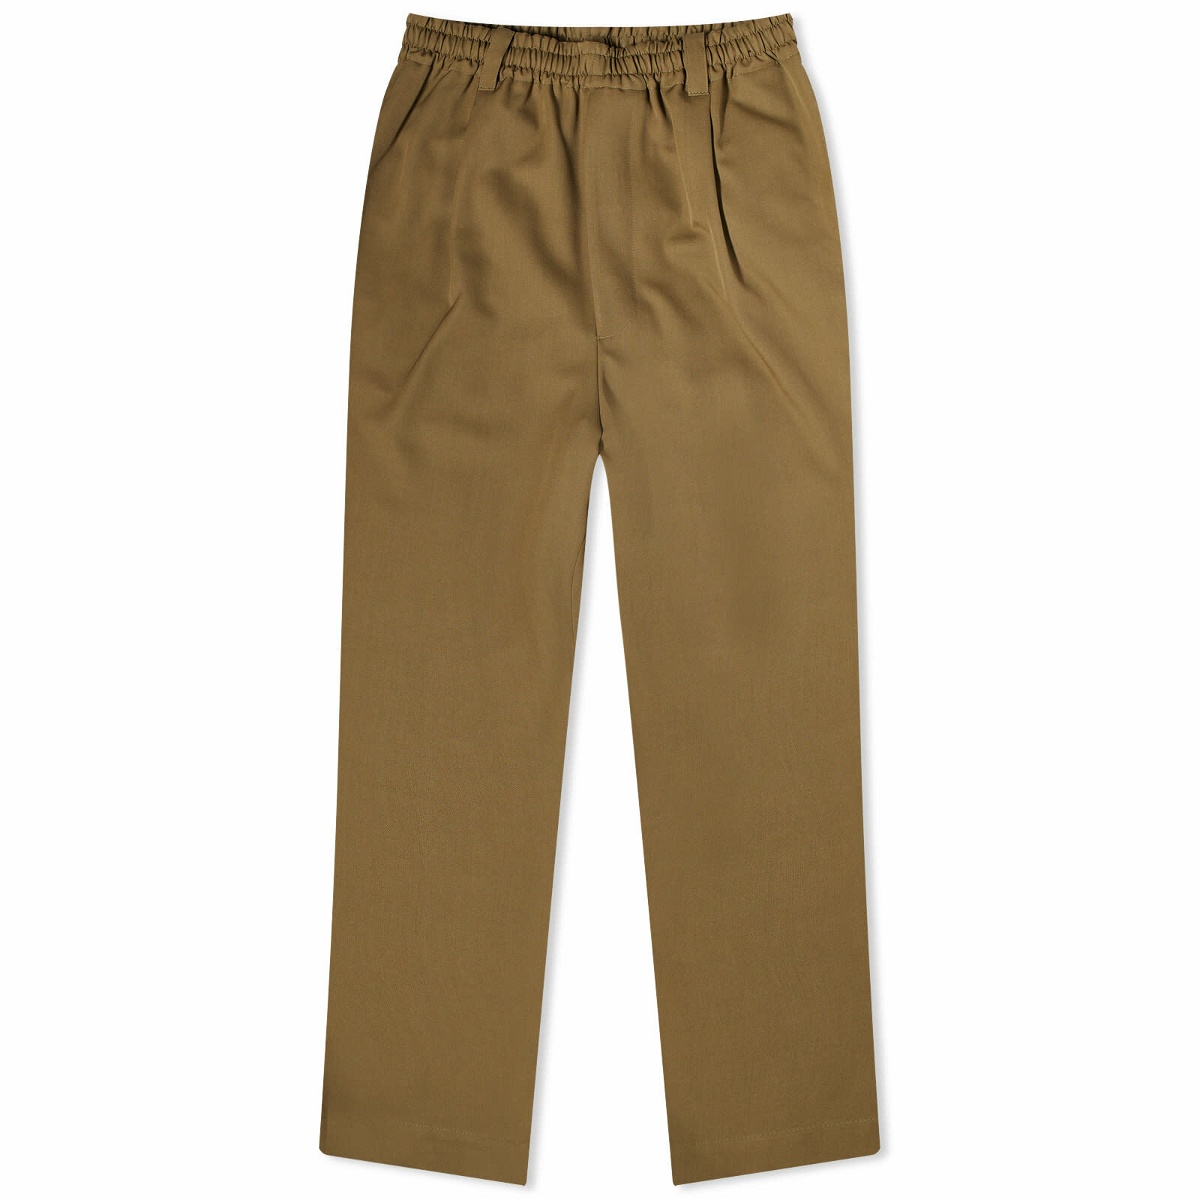 Buy Highlander Boa Slim Fit Chinos Trouser for Men Online at Rs.899 - Ketch